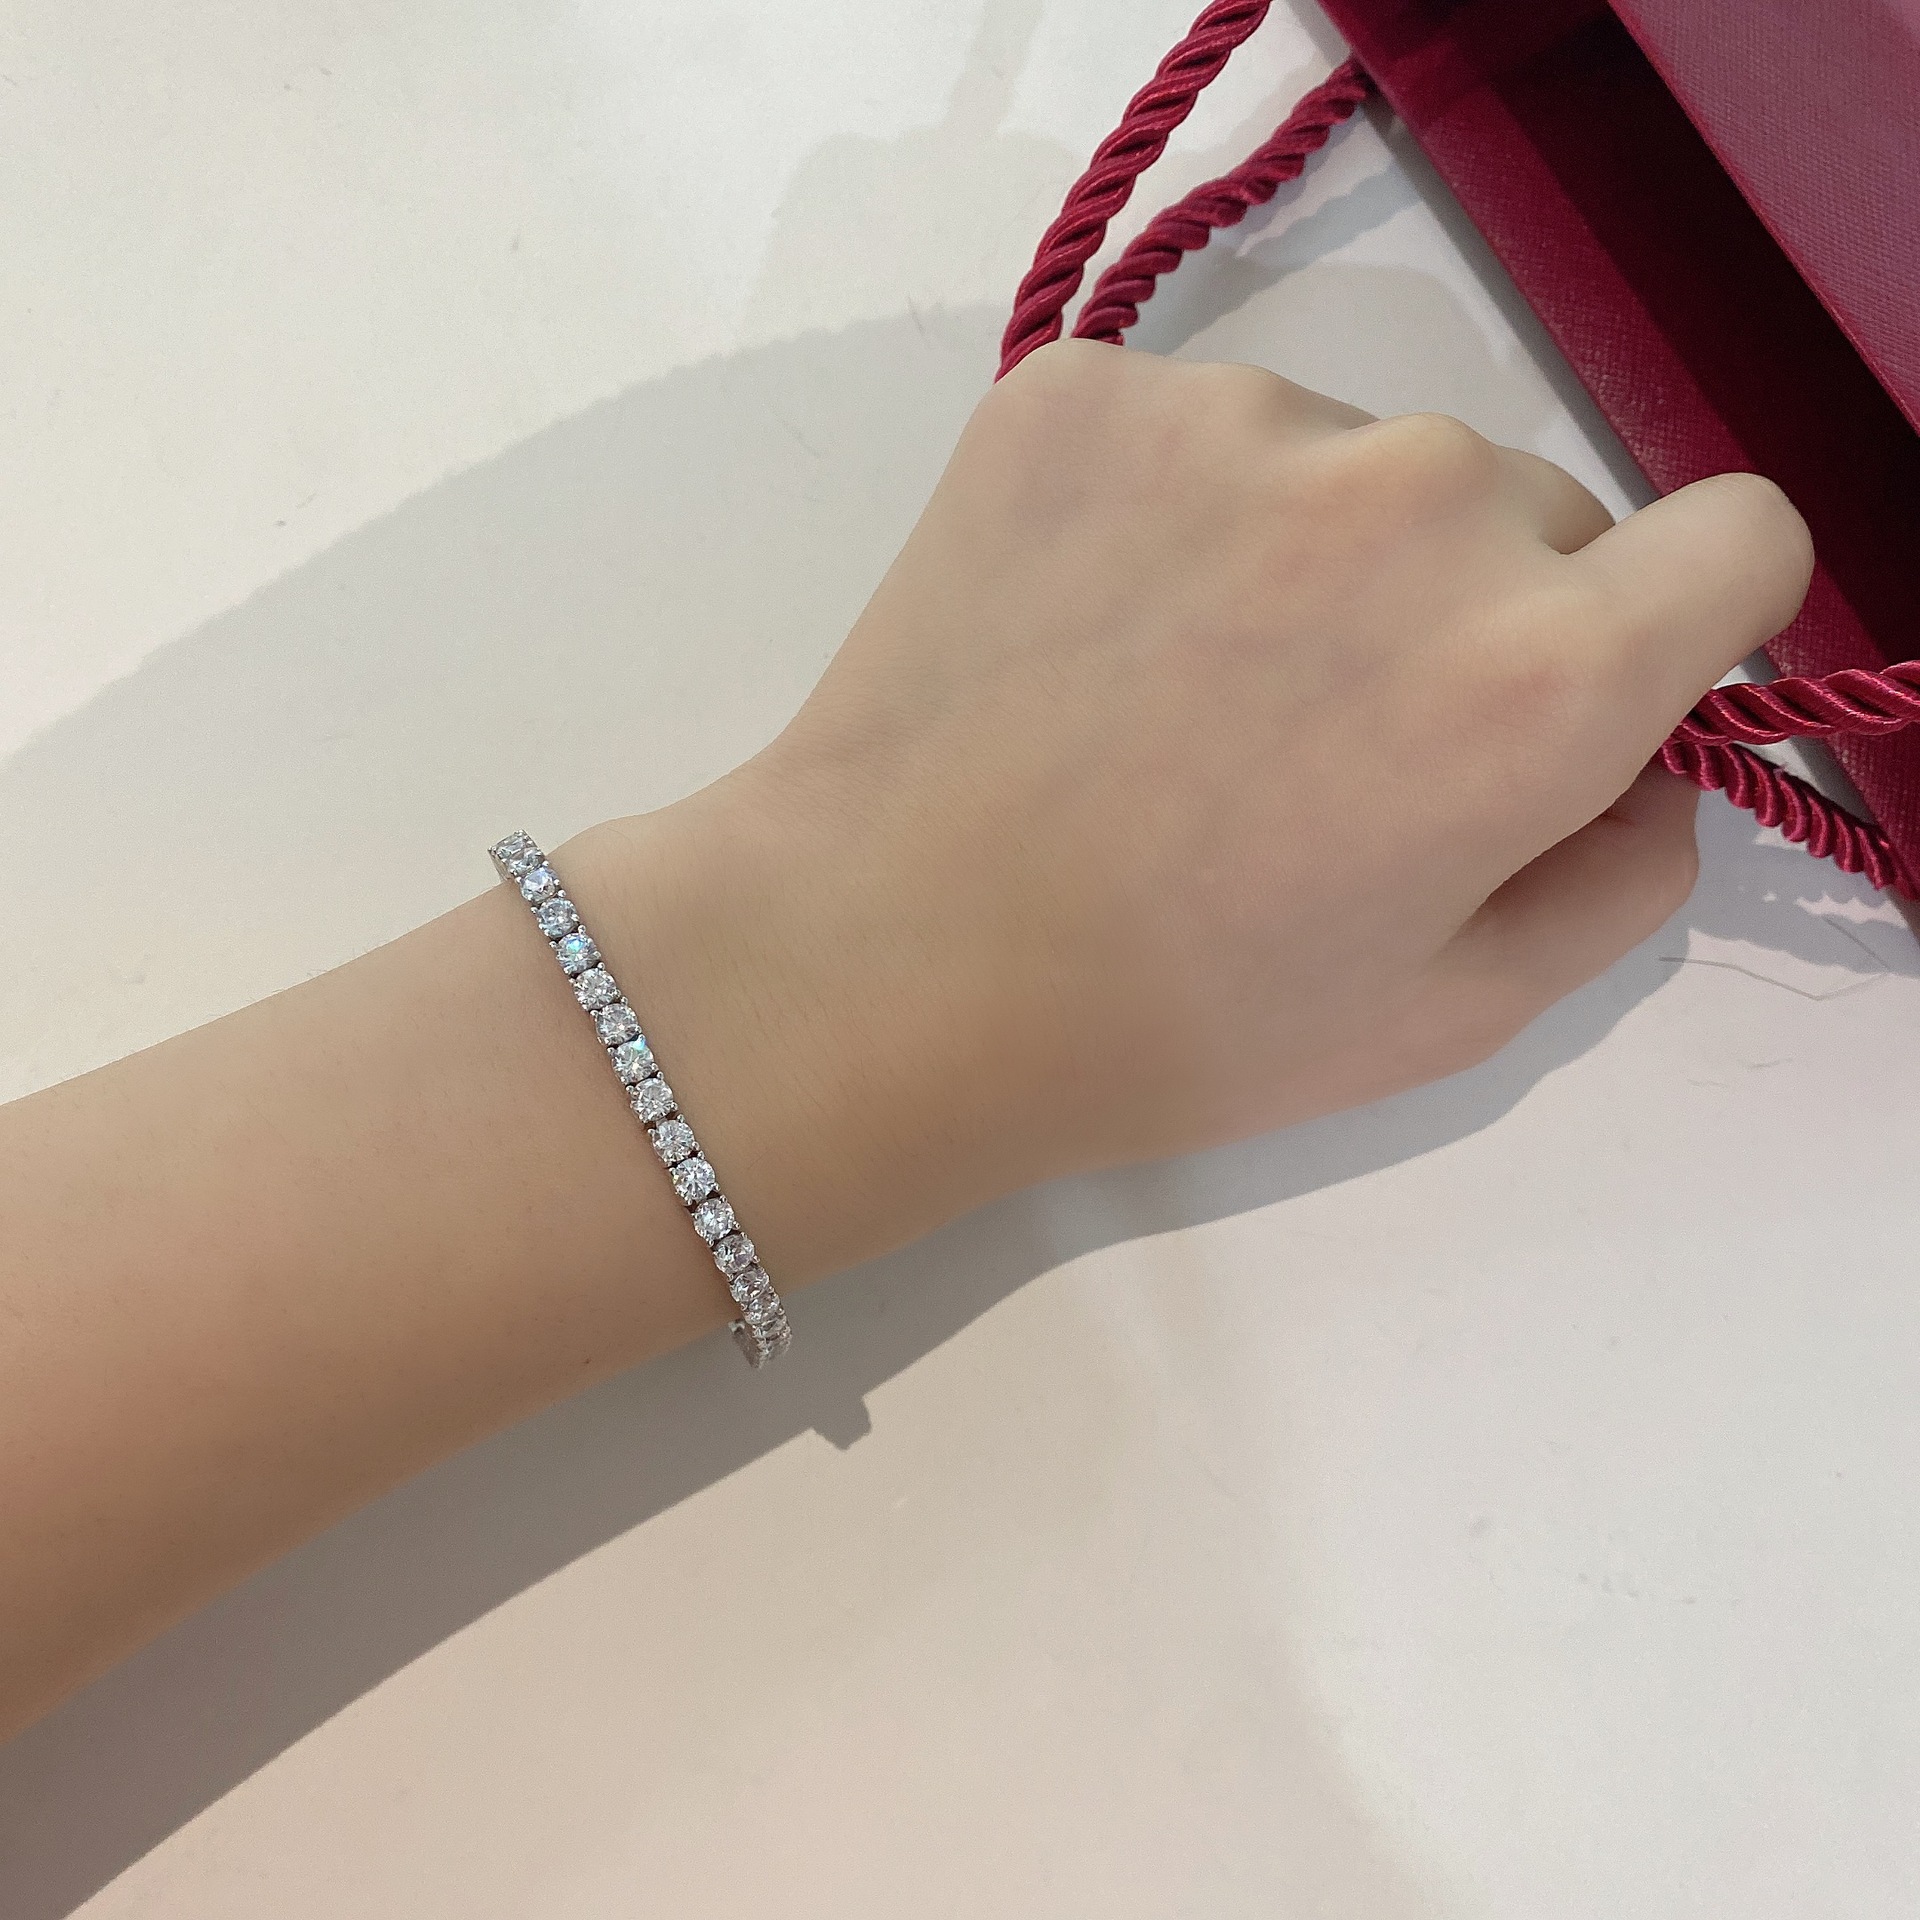 5mm White Diamond tennis bracelet